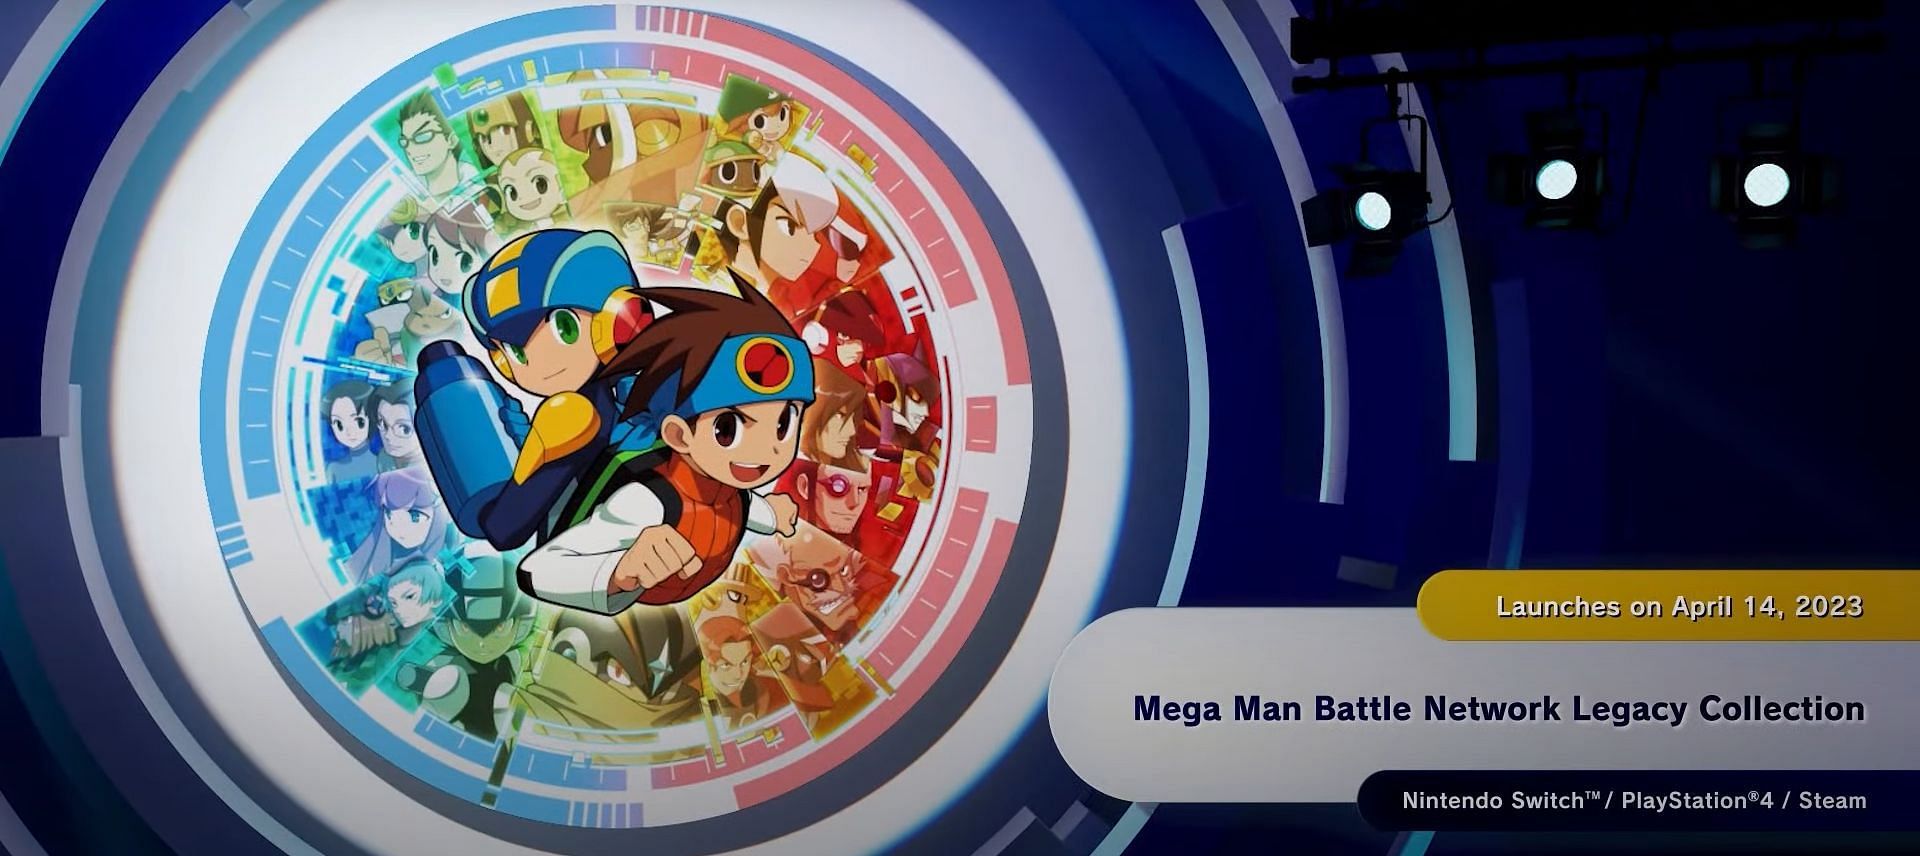 Mega Man Battle Network Legacy Collection launches April 14th (Image via Capcom Spotlight)